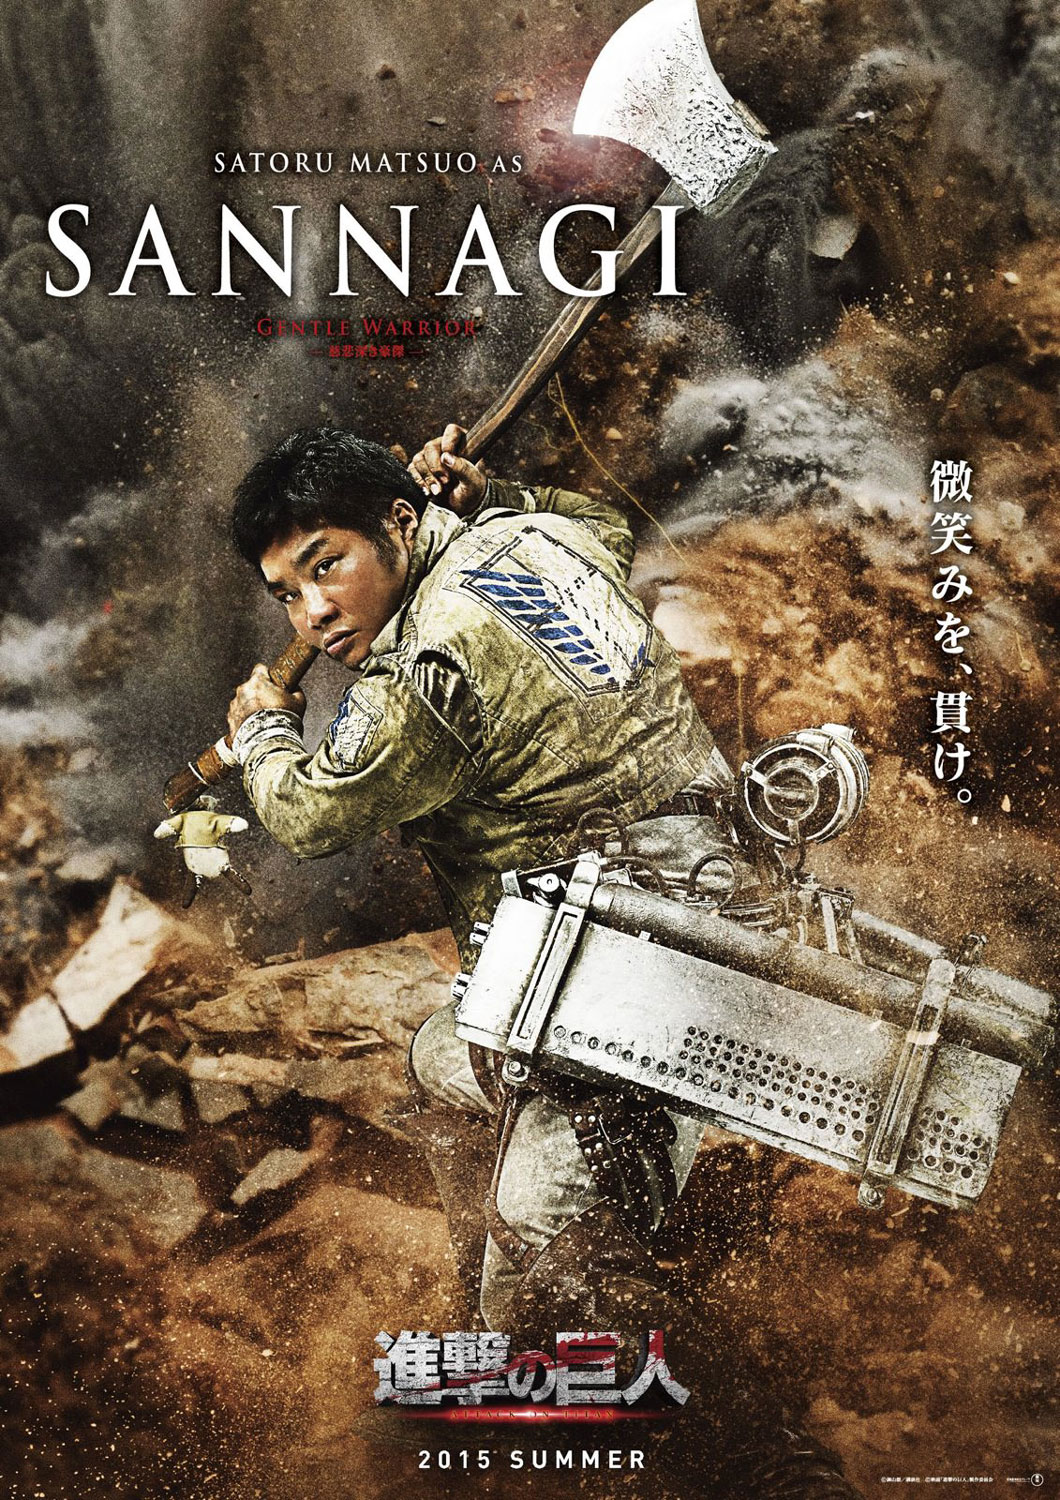 Satoru Matsuo Attack on Titan Sannagi